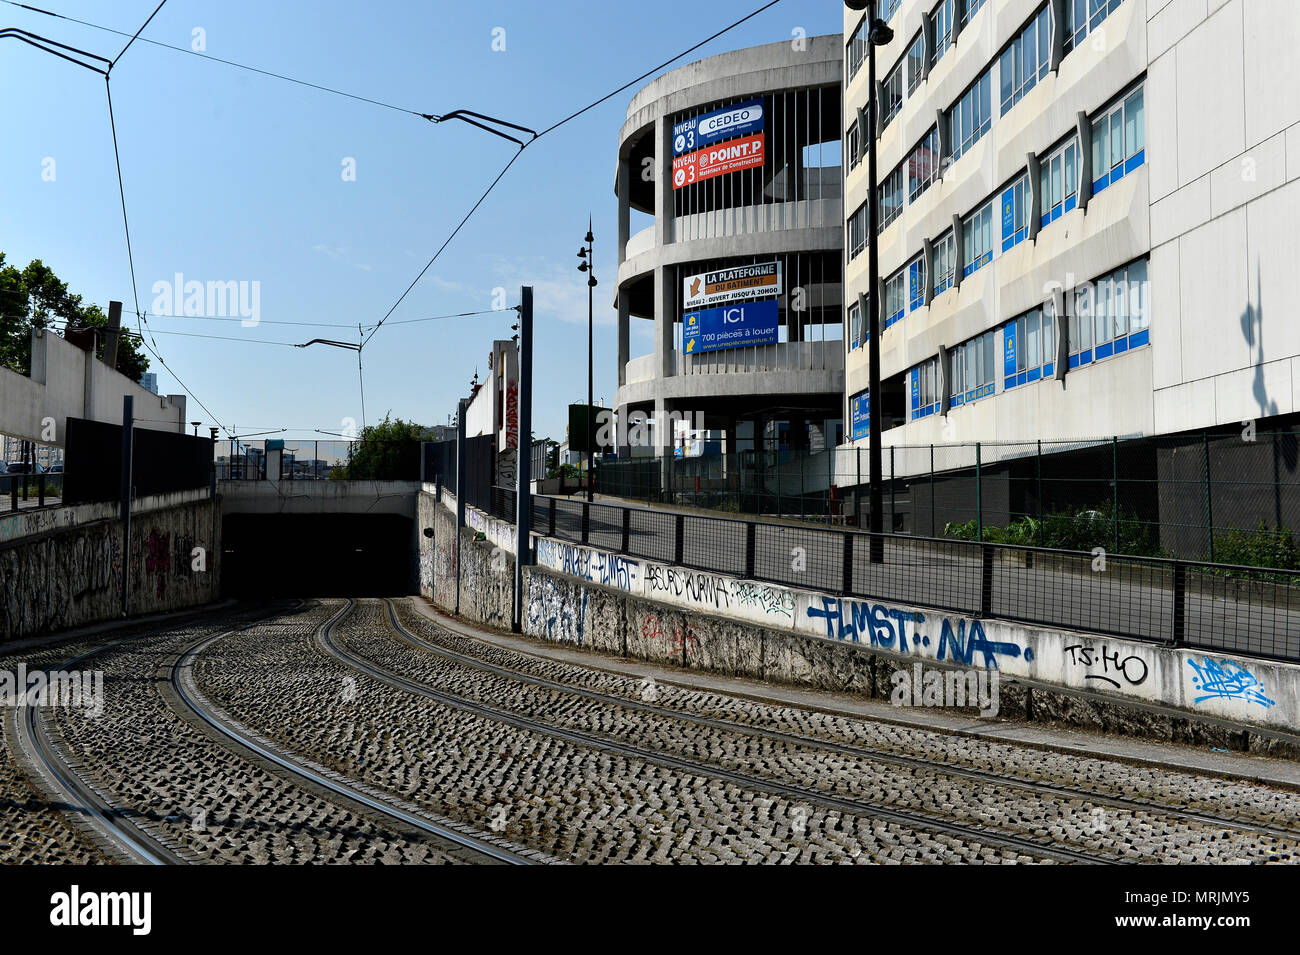 Tramway track - Porte d'Aubervilliers - Paris - France Stock Photo - Alamy